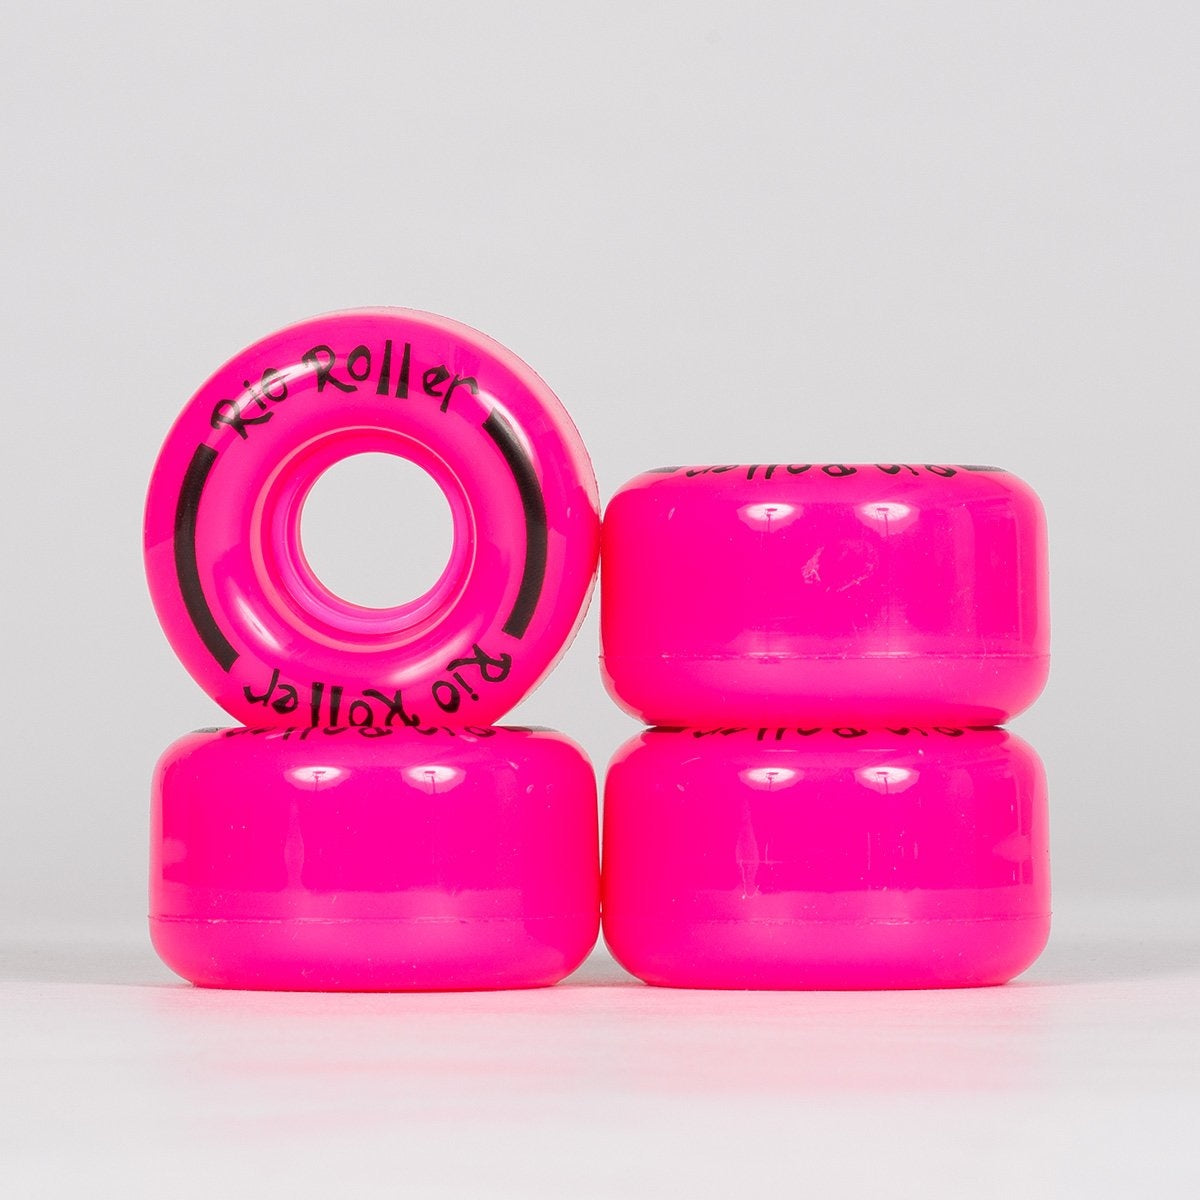 Rio Roller Coaster Wheels x4 Pink 58mm - Skates